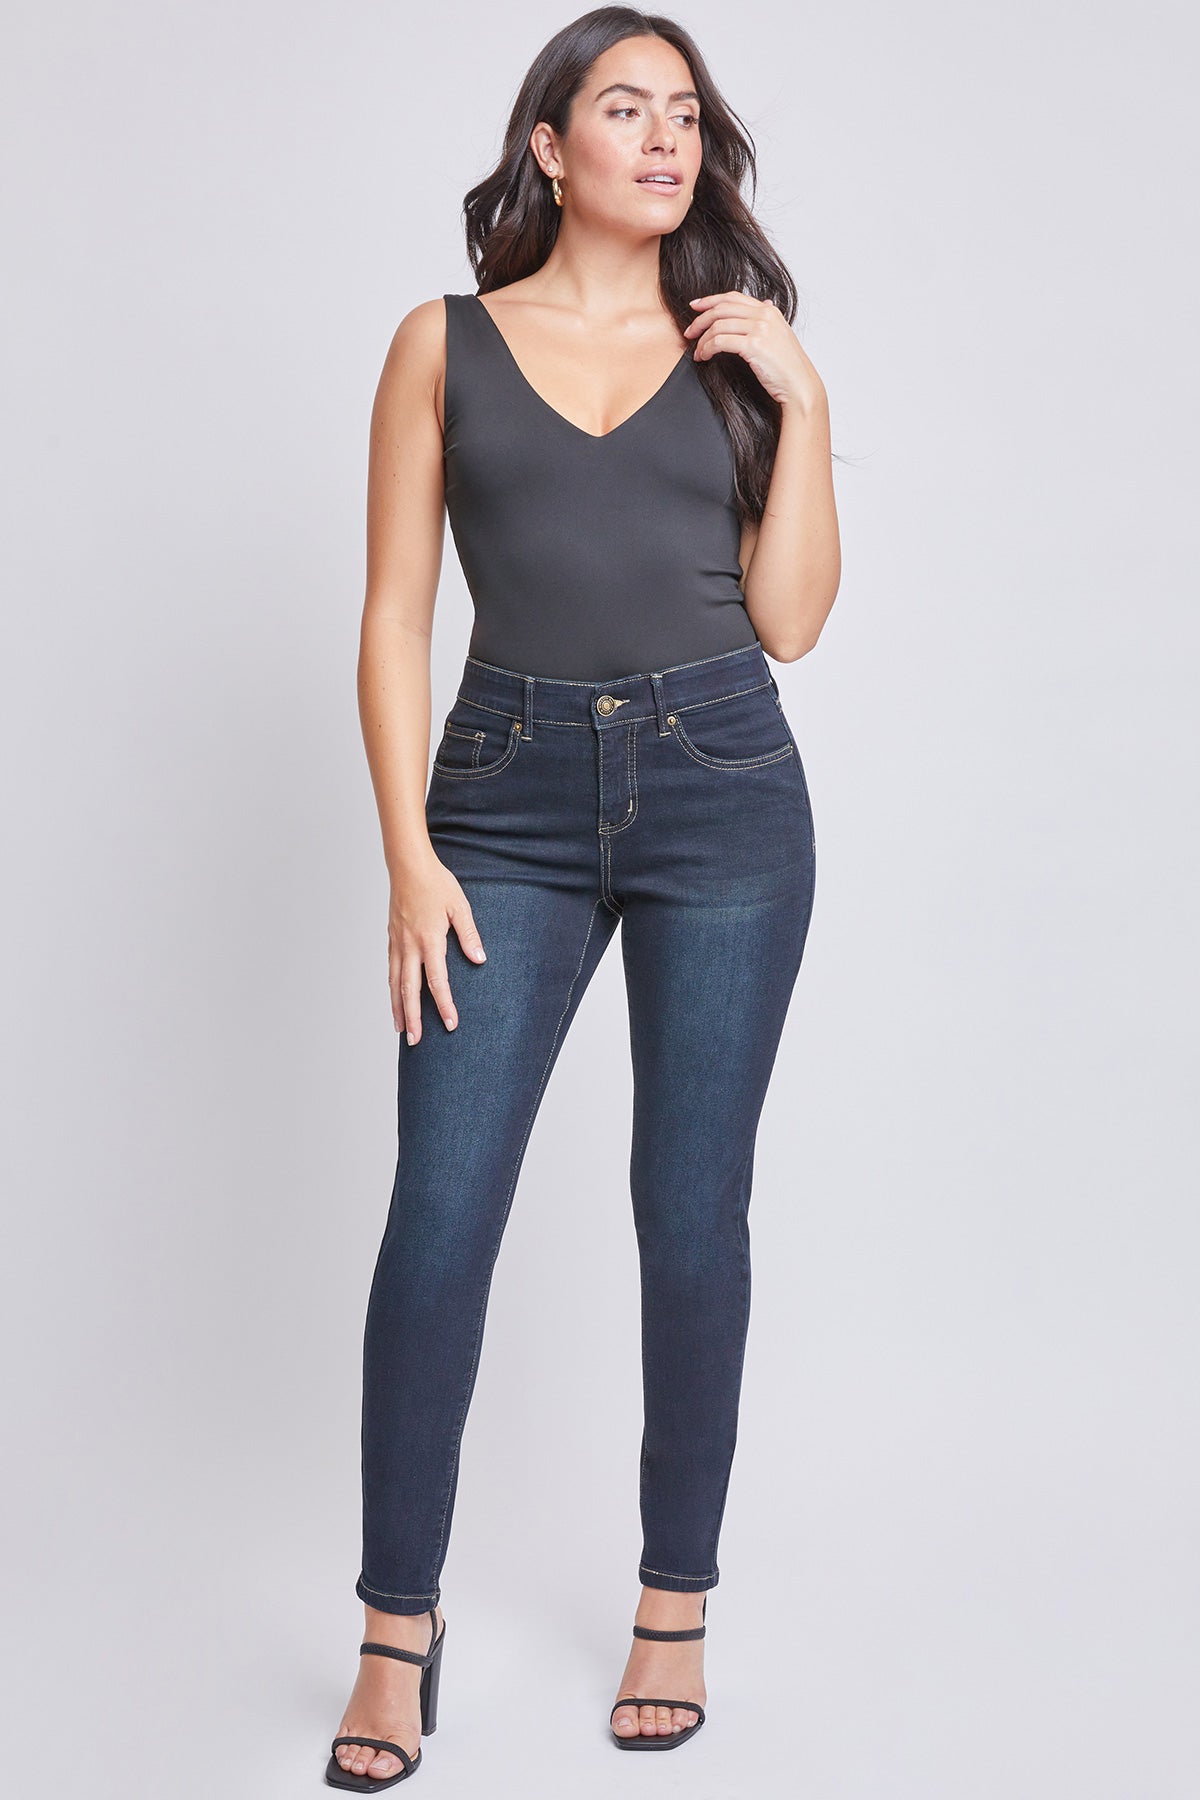 Wholesale Jeans Women - (Junior, Missy, Girls Plus sizes Jeans) – YMI JEANS  WHOLESALE